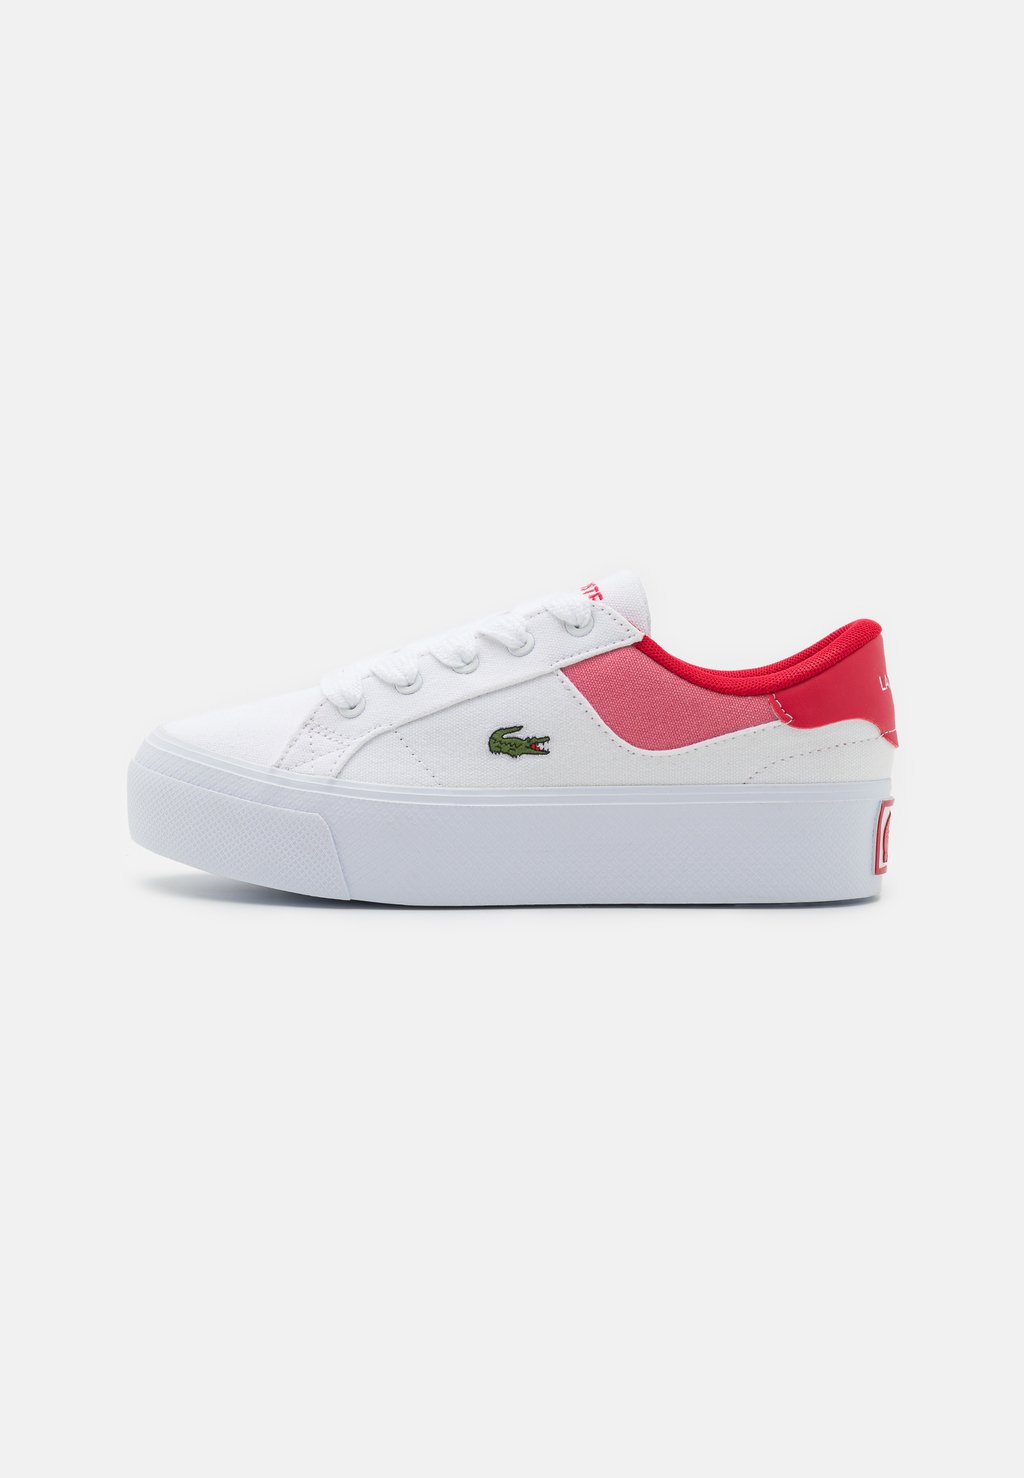 Низкие кроссовки Ziane Platform Lacoste, цвет white/red низкие кроссовки platform lacoste цвет white pink